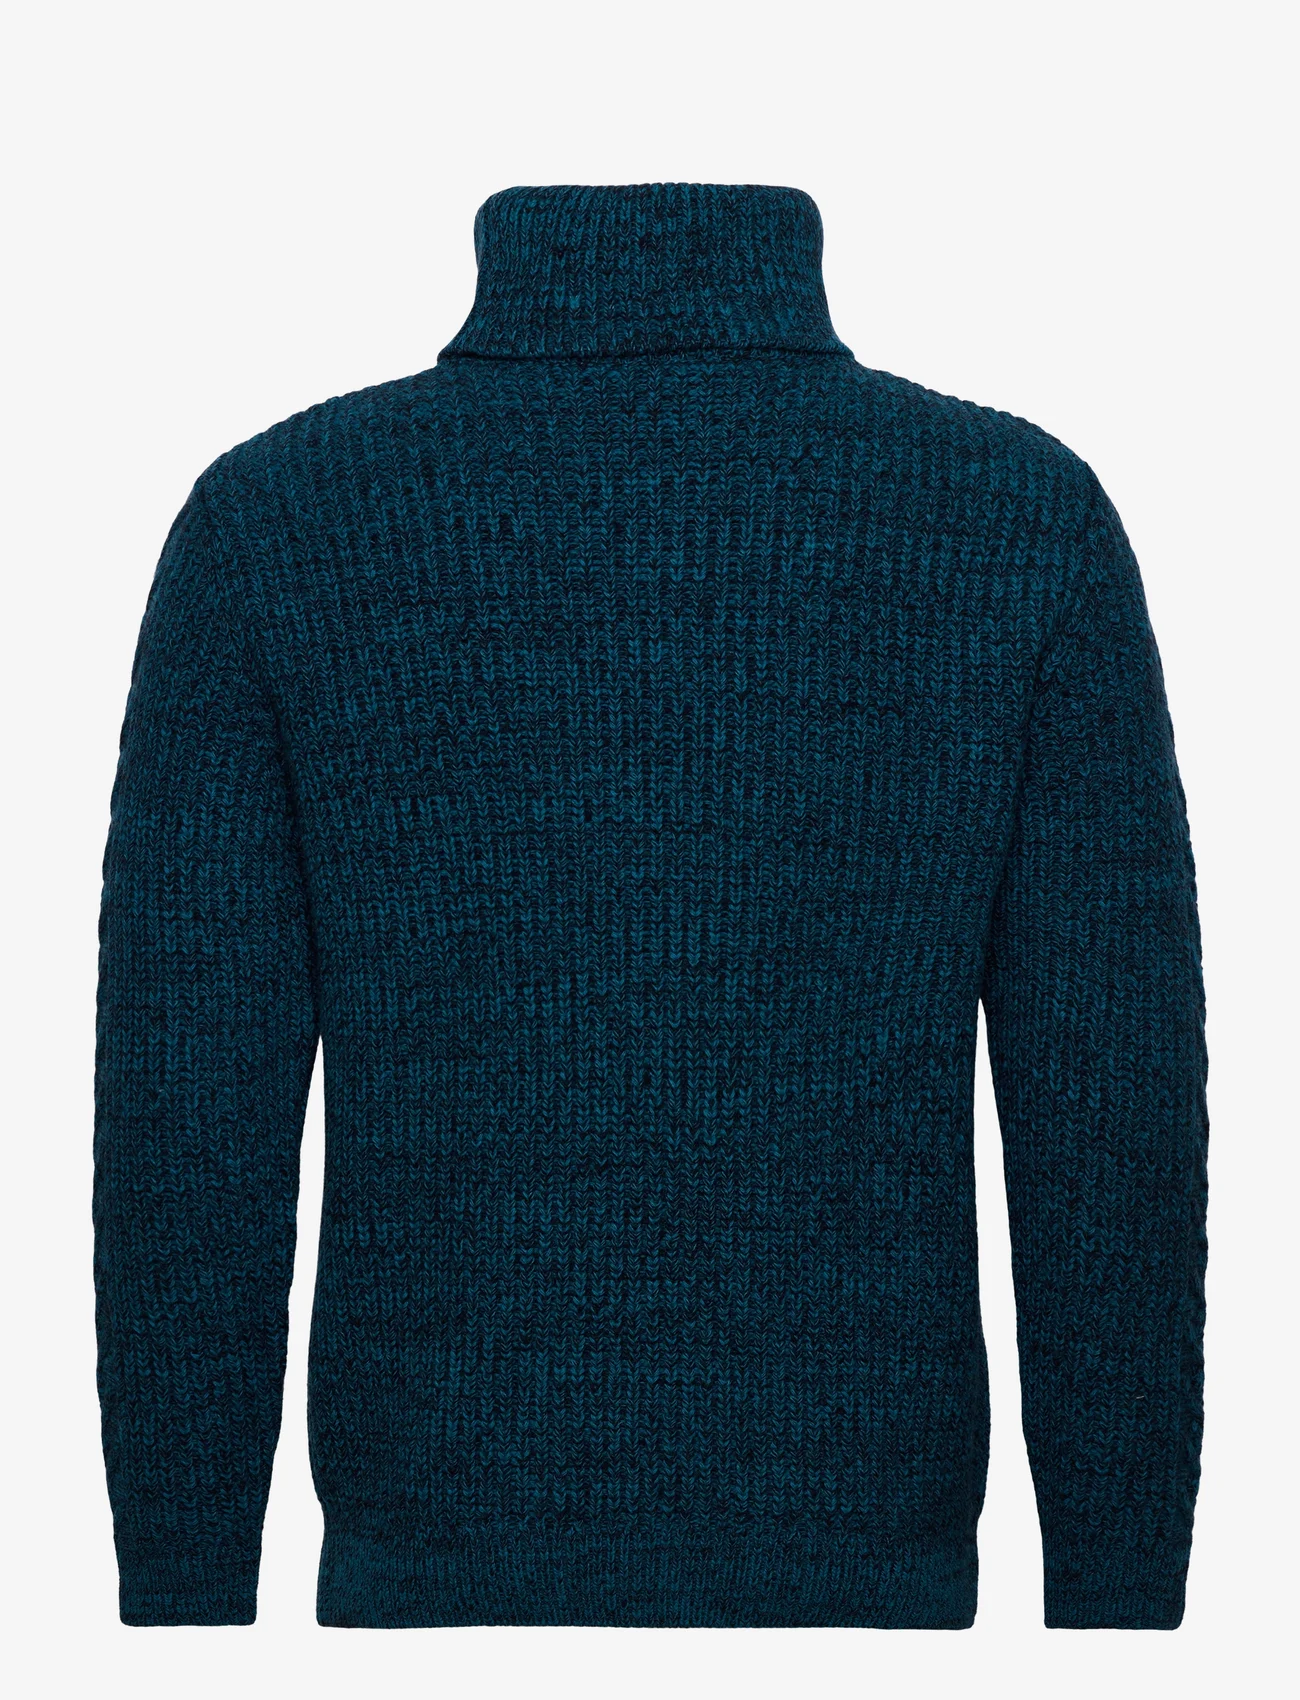 Armor Lux - Turtle neck Sweater Héritage - polokrage - moulinÉ bleu glacial - 1